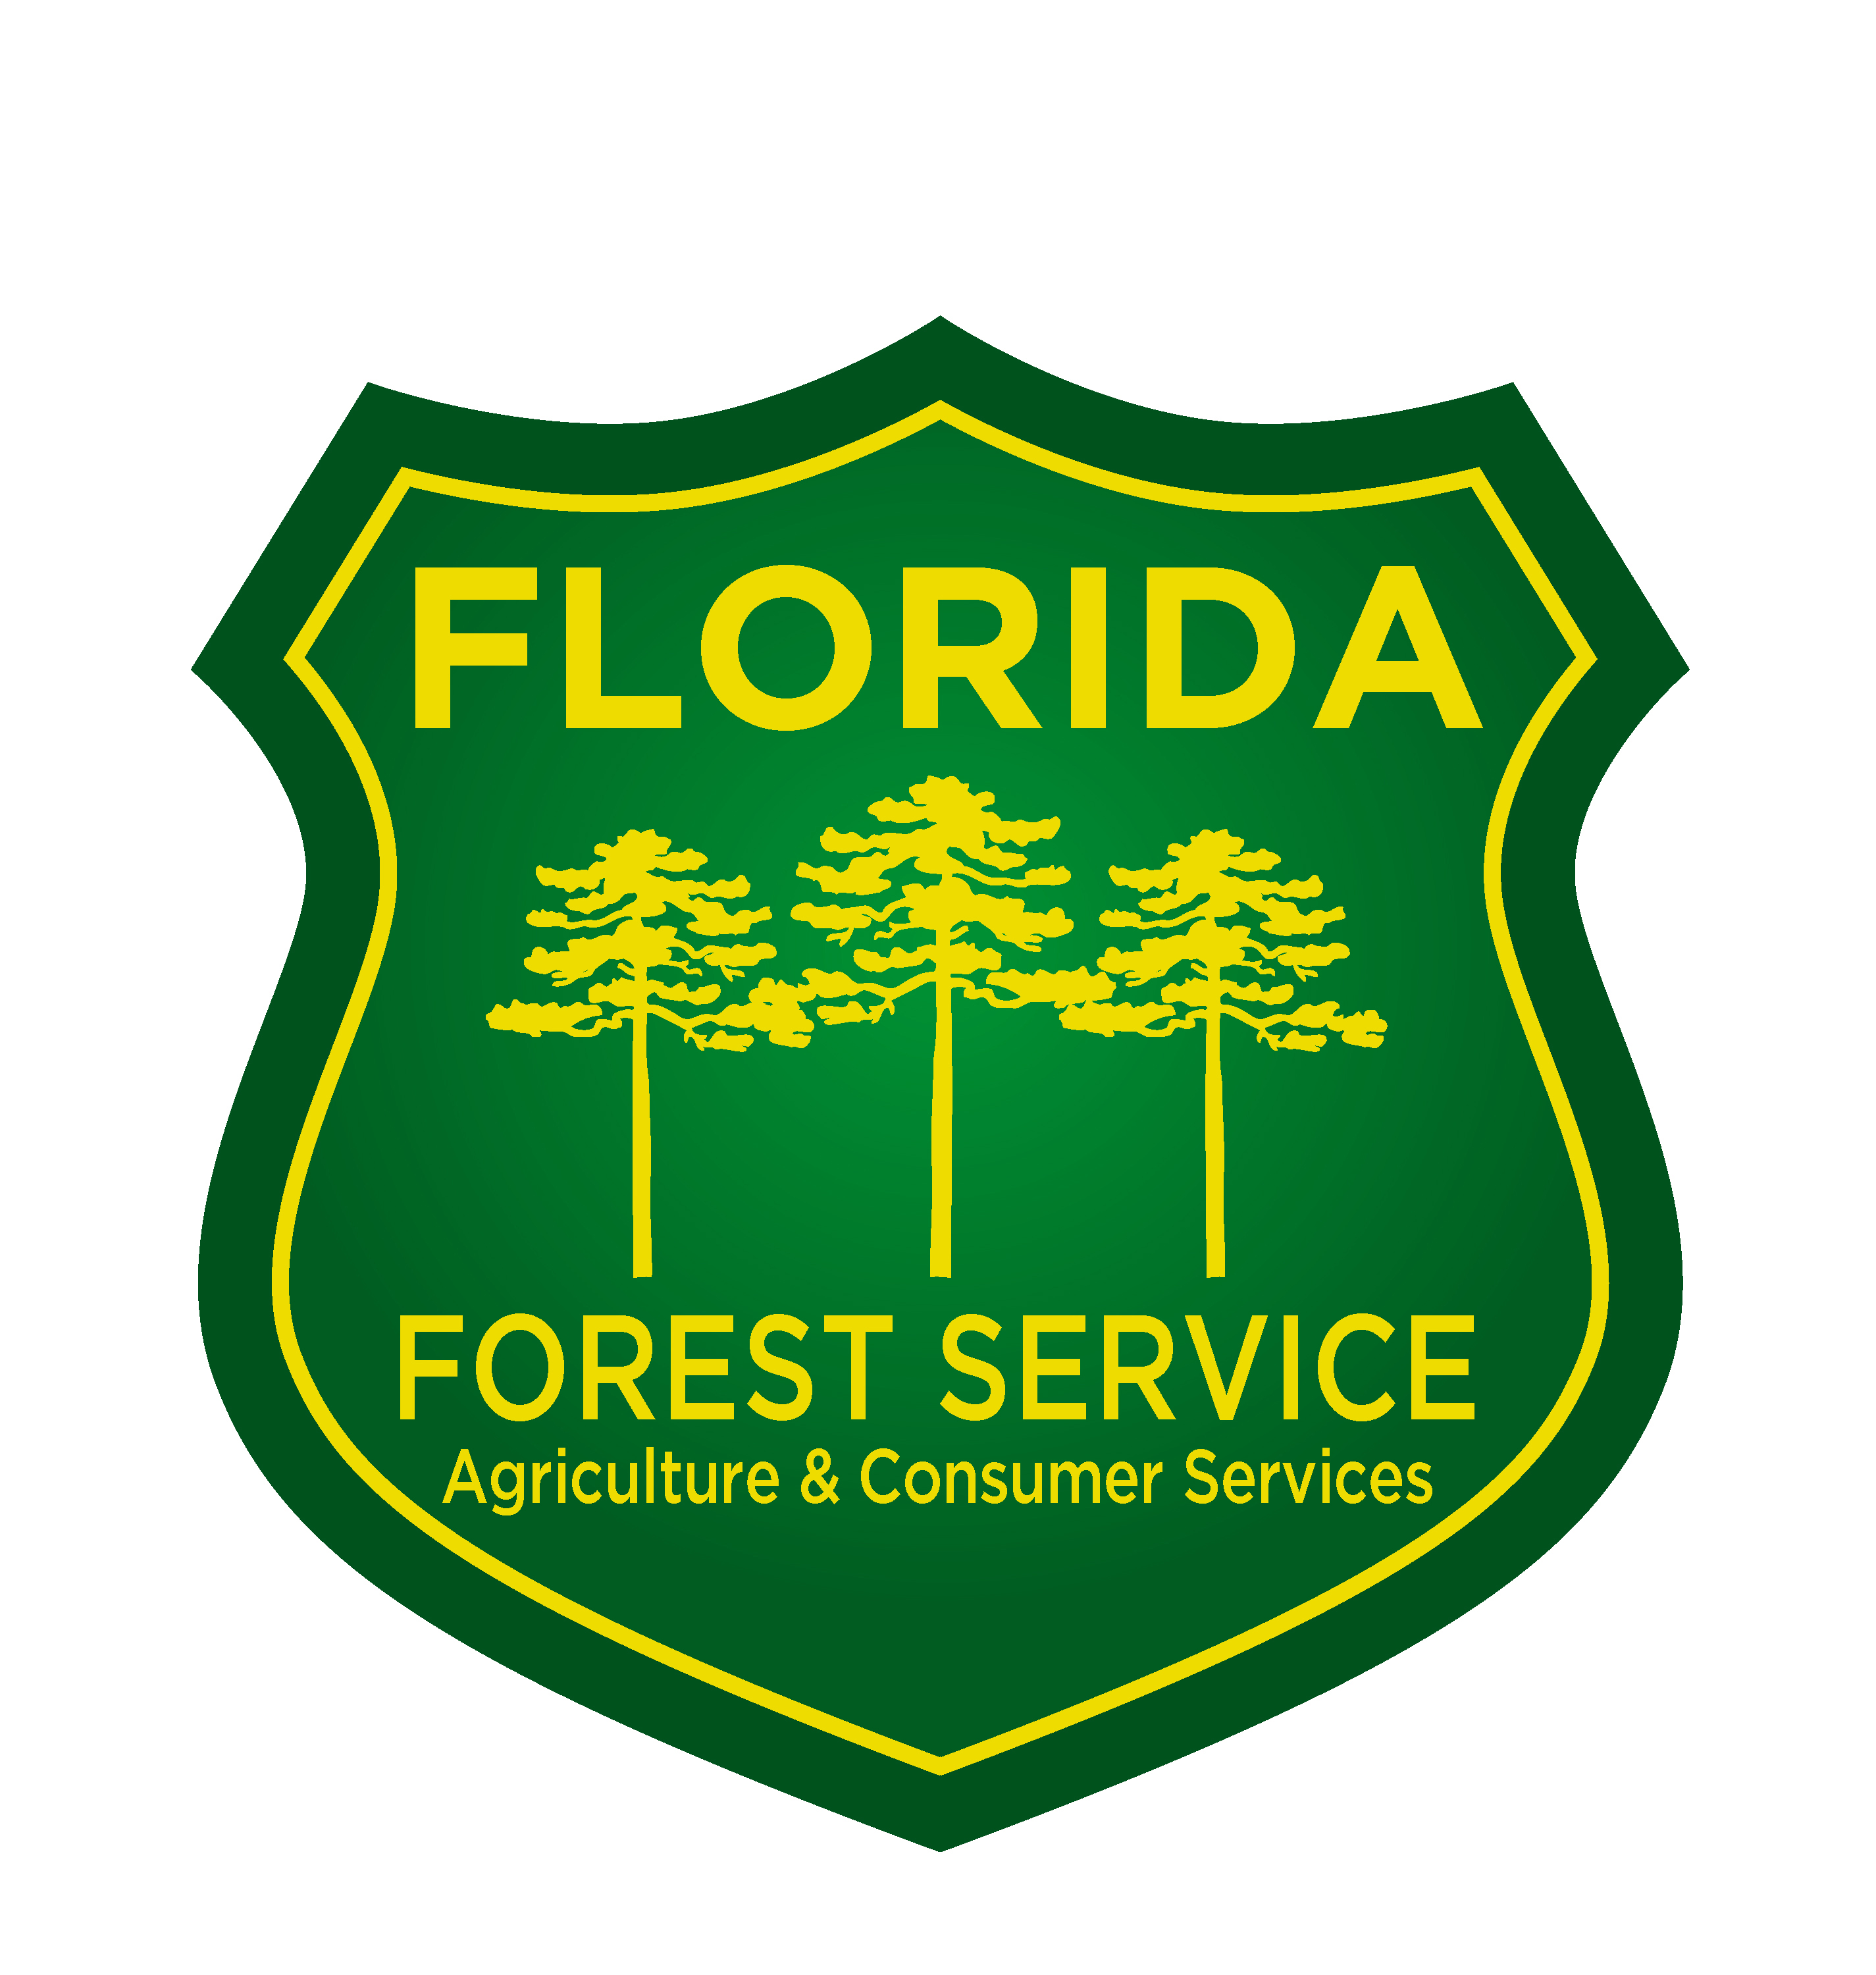 Florida Forest Service